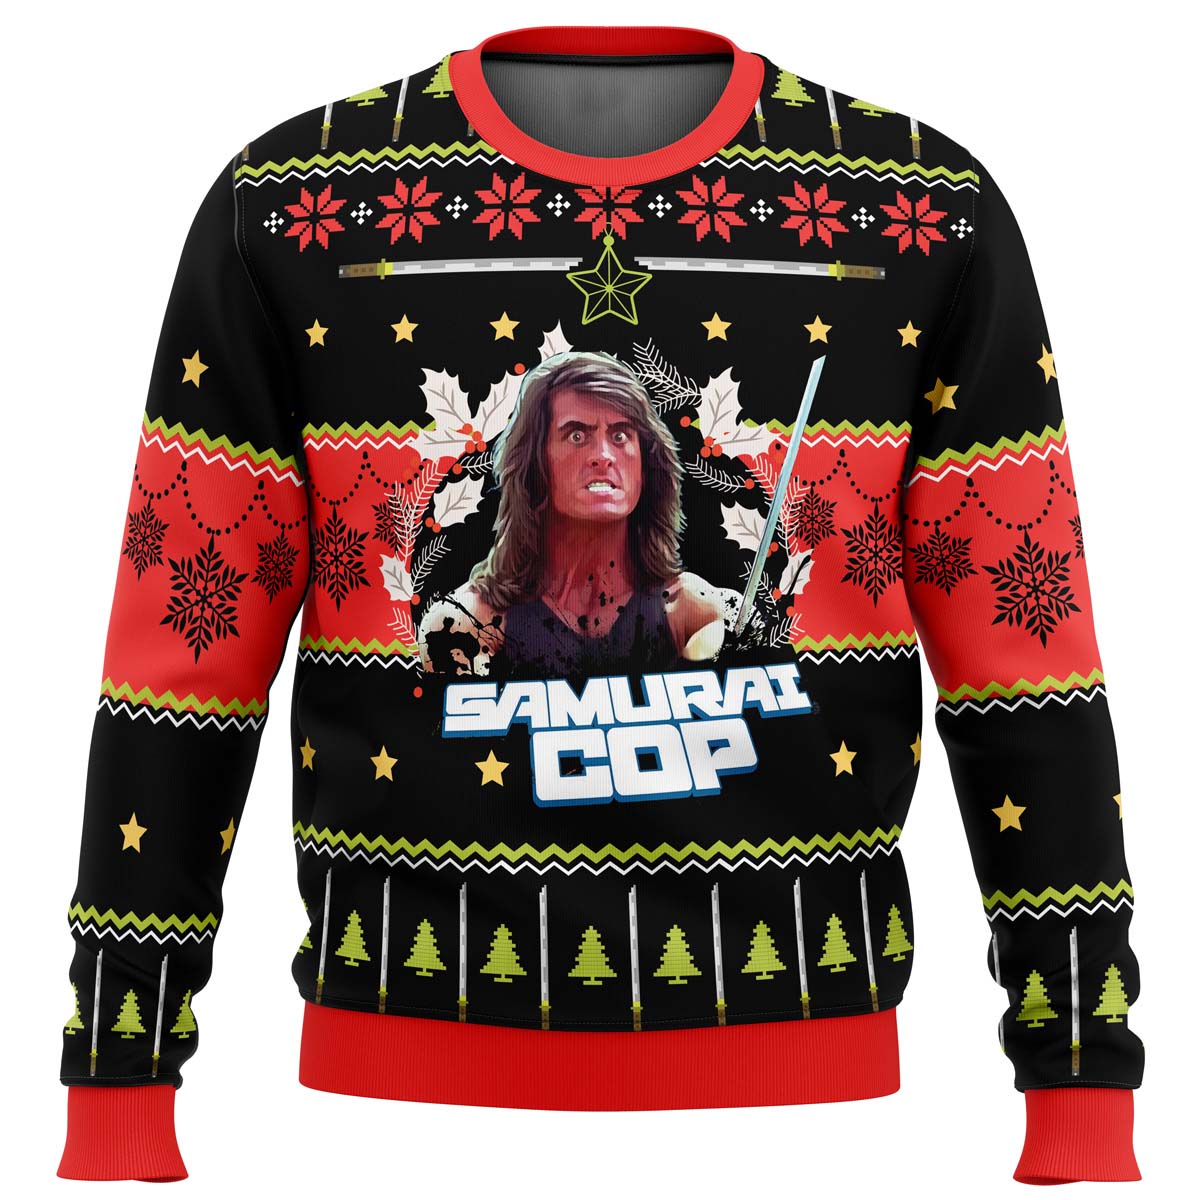 Samurai Cop Ugly Christmas Sweater